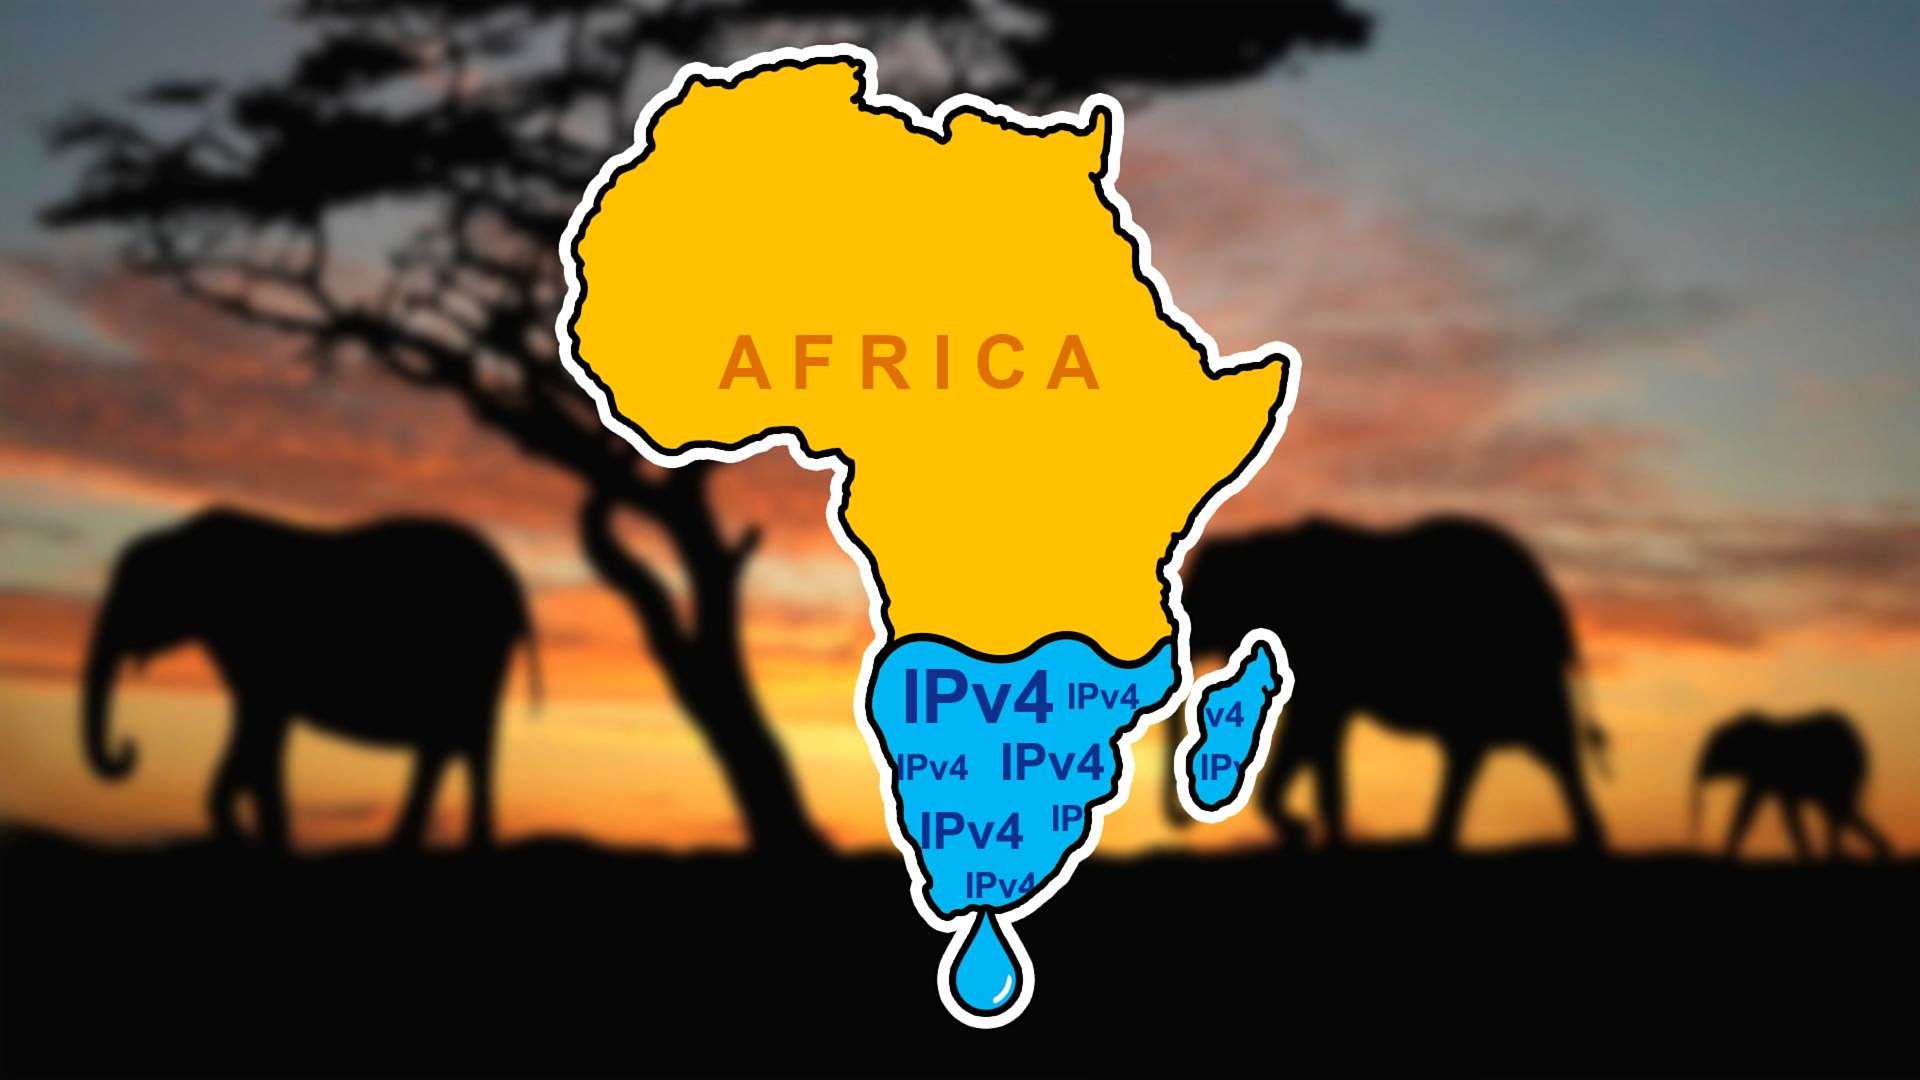 Exhaustion of ipv4 addresses in AFRINIC region